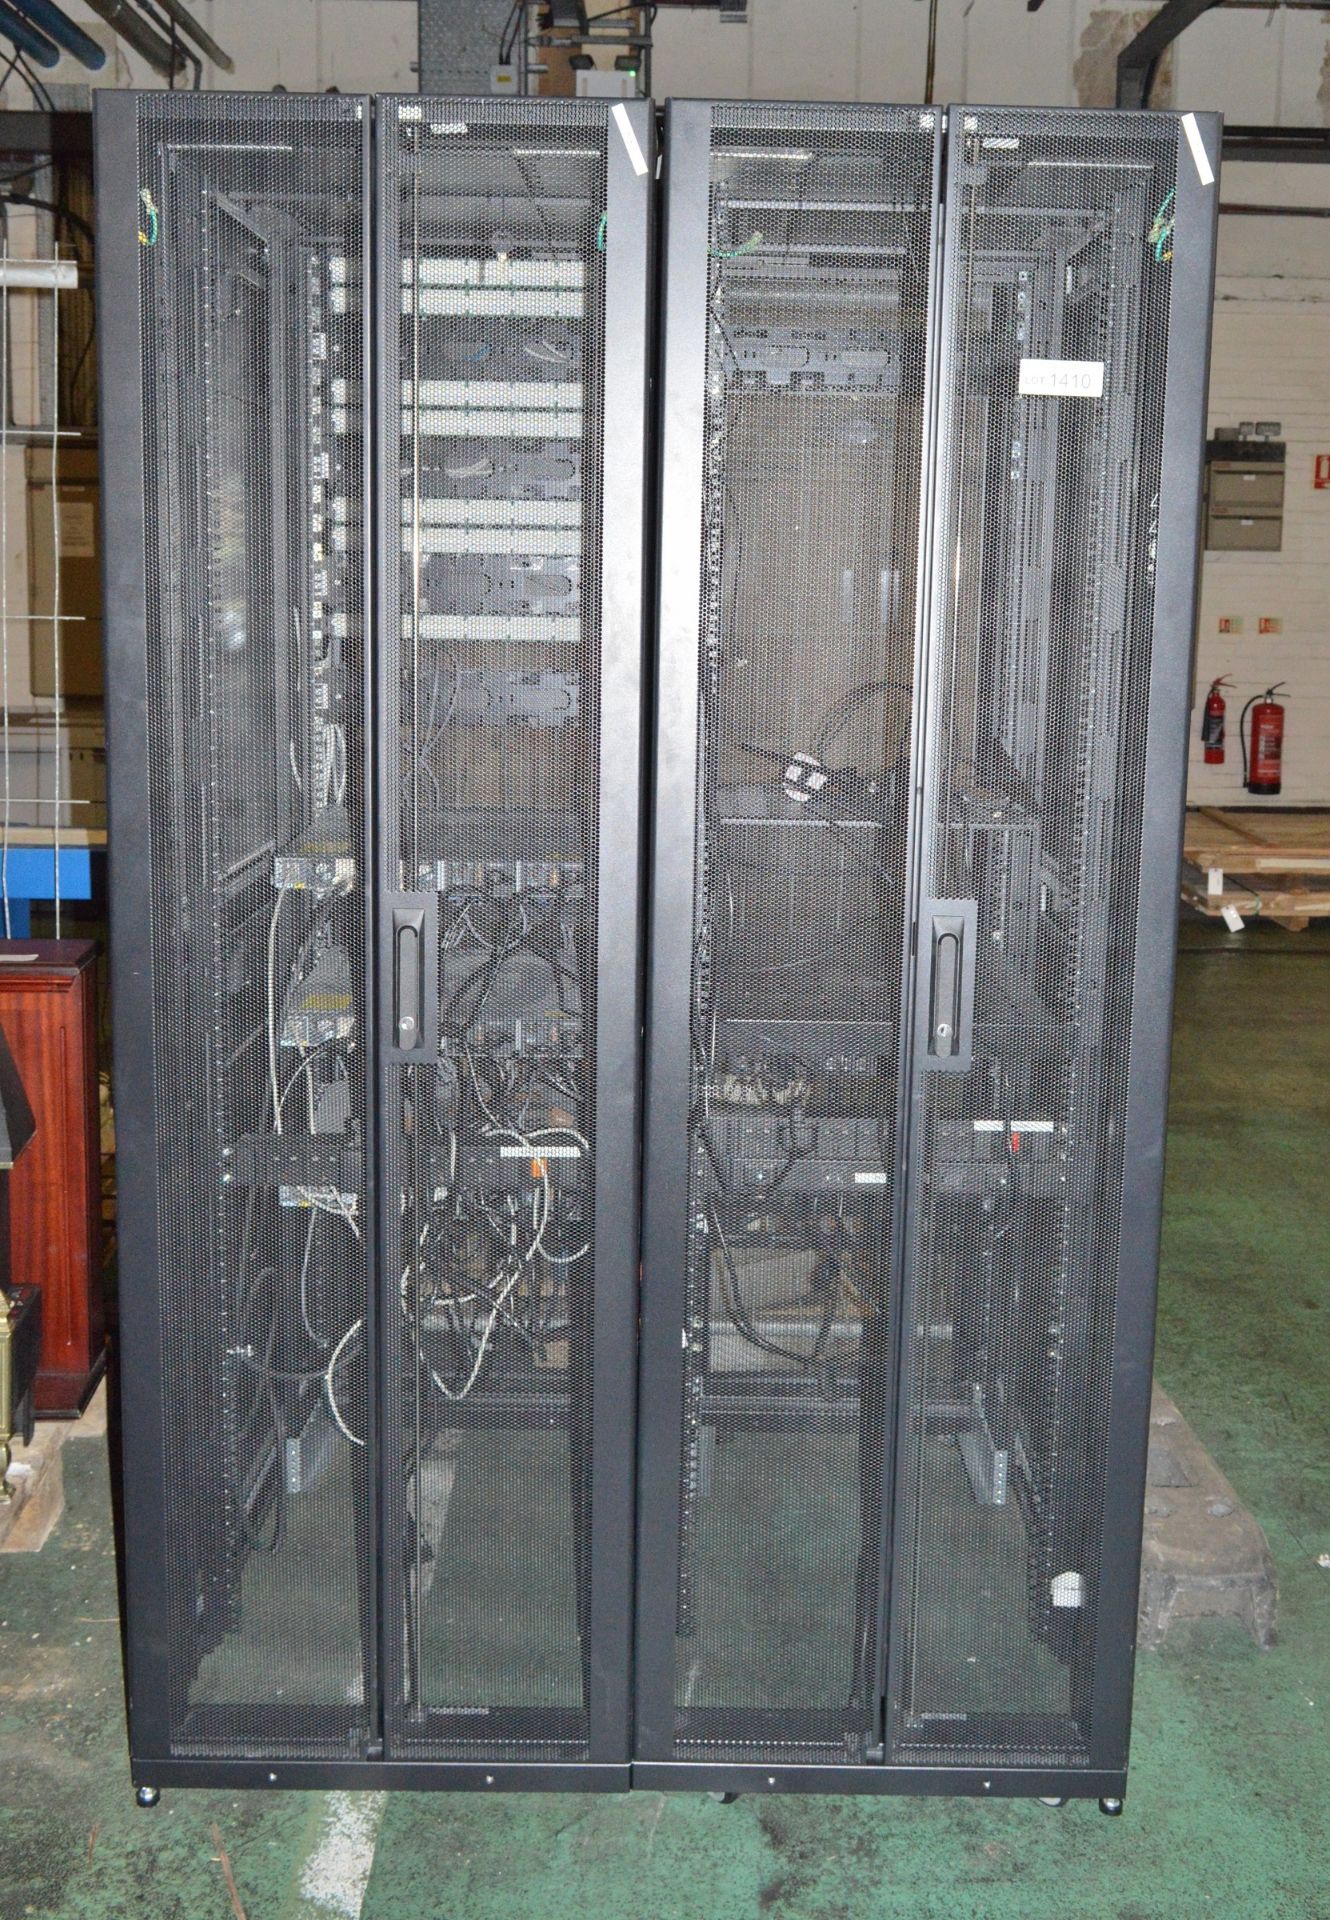 2x Server / Electronic Racks APC Schneider - 1200mm wide x 1070mm deep x 2000mm high